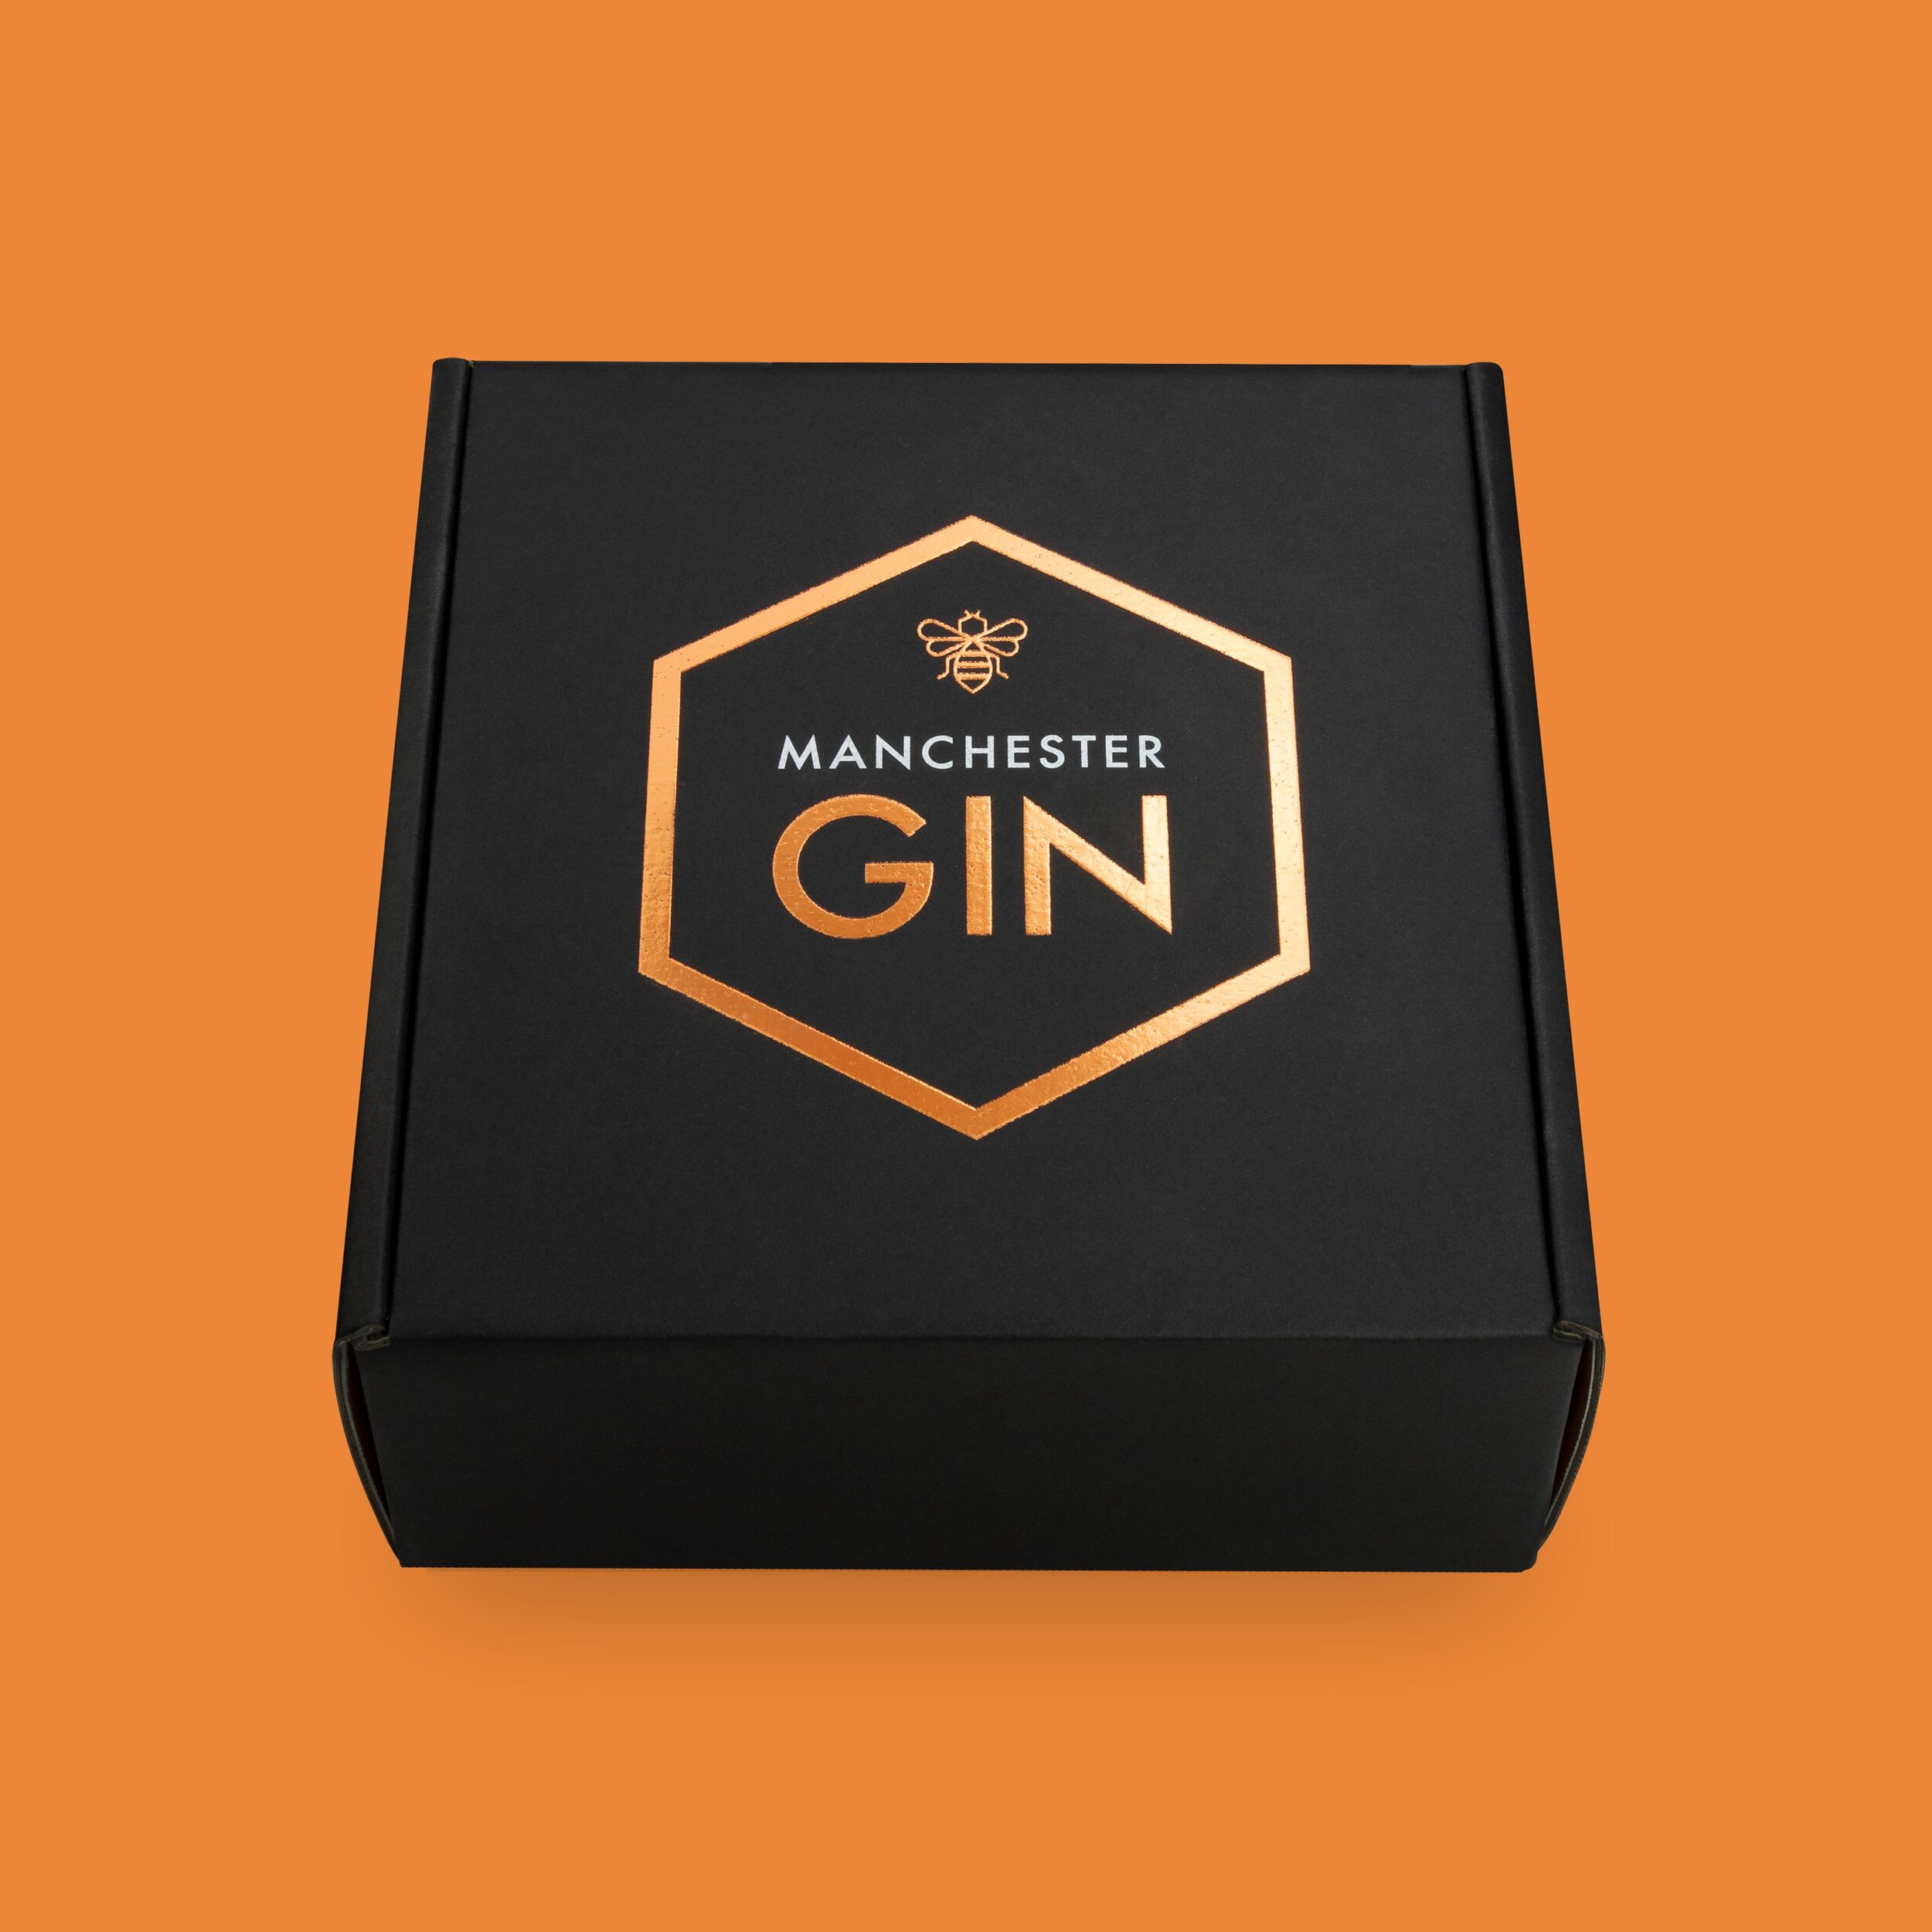 Manchester-Gin-Wow-Box-Outer-Postal-Packaging-Design.jpg